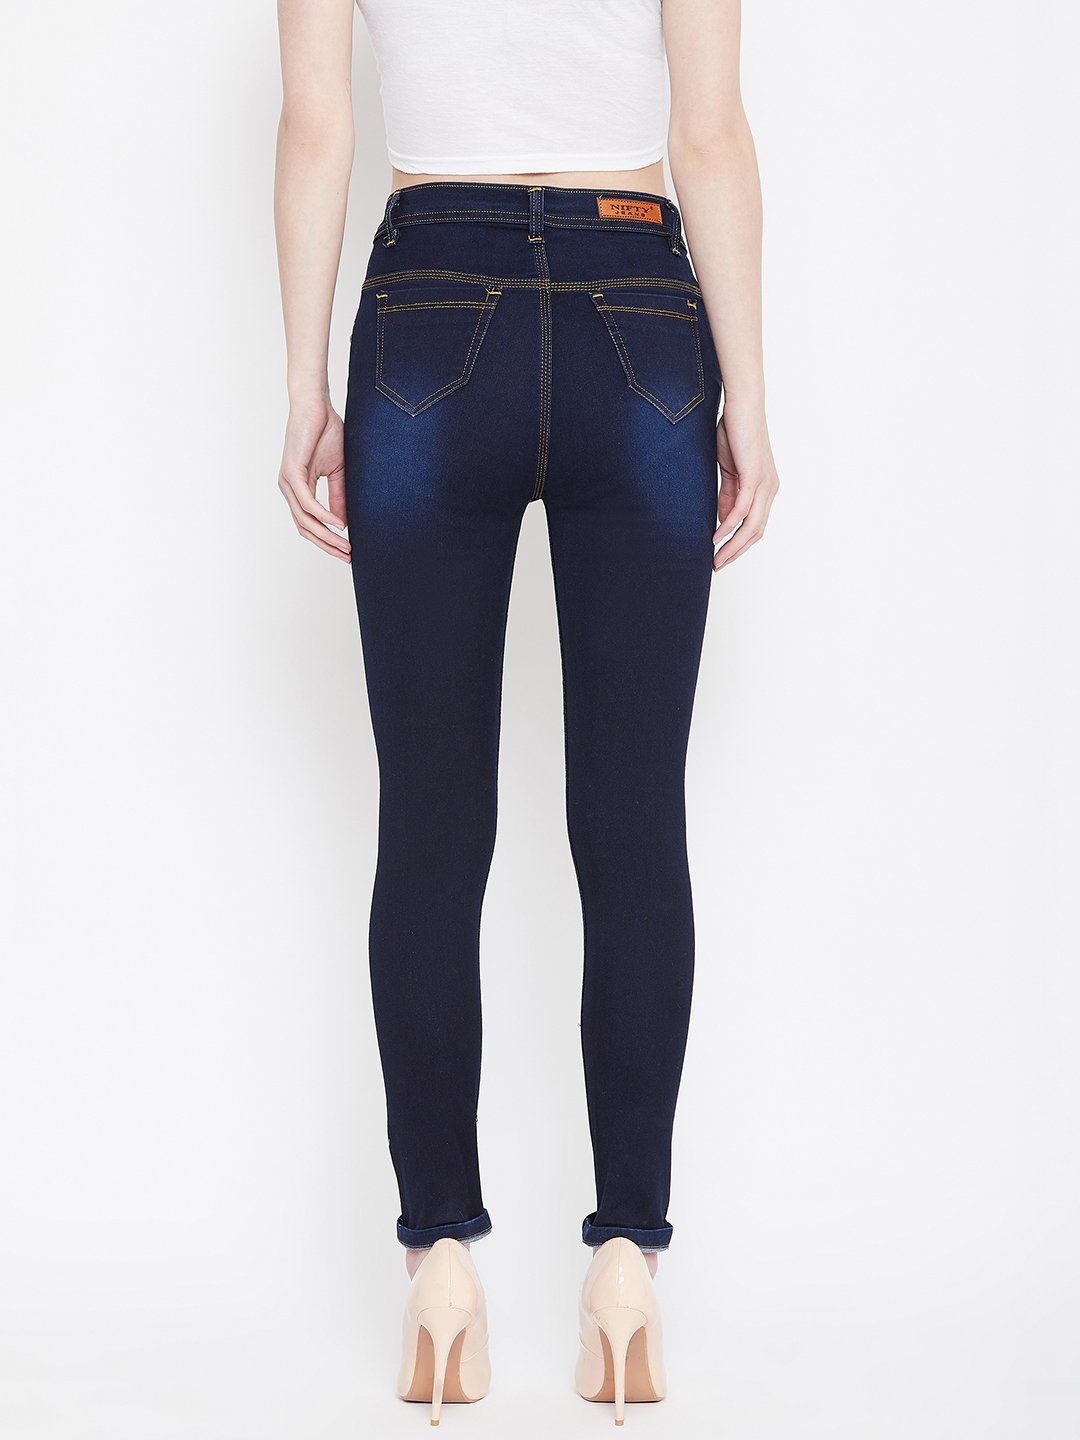 High Waist Stretchable Basic Blue Jeans - NiftyJeans